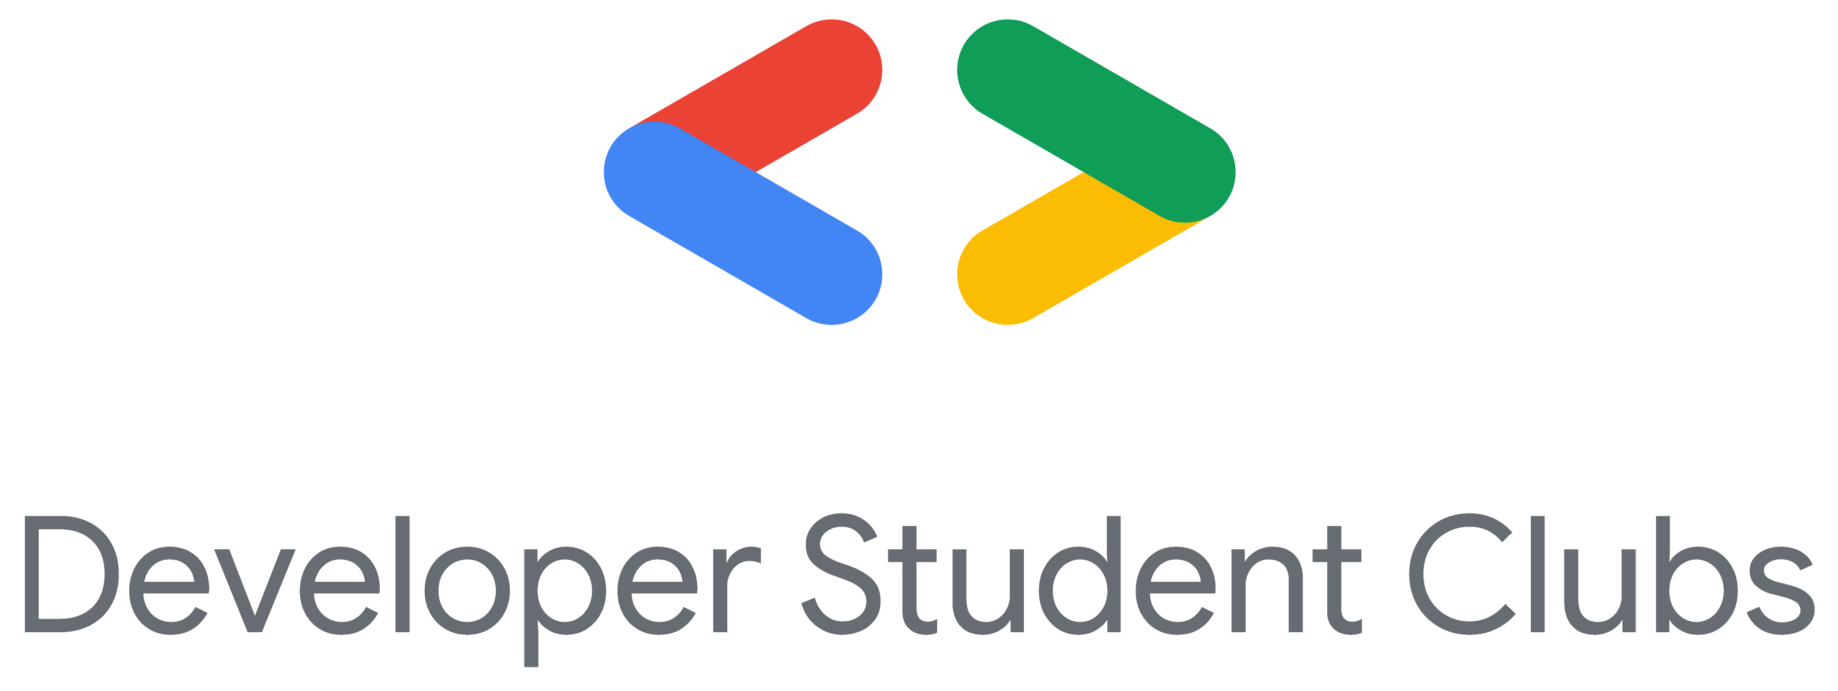 GitHub - AhmedRaja1/DSC-Logo-Generator-Developer-Student-Clubs-Google ...